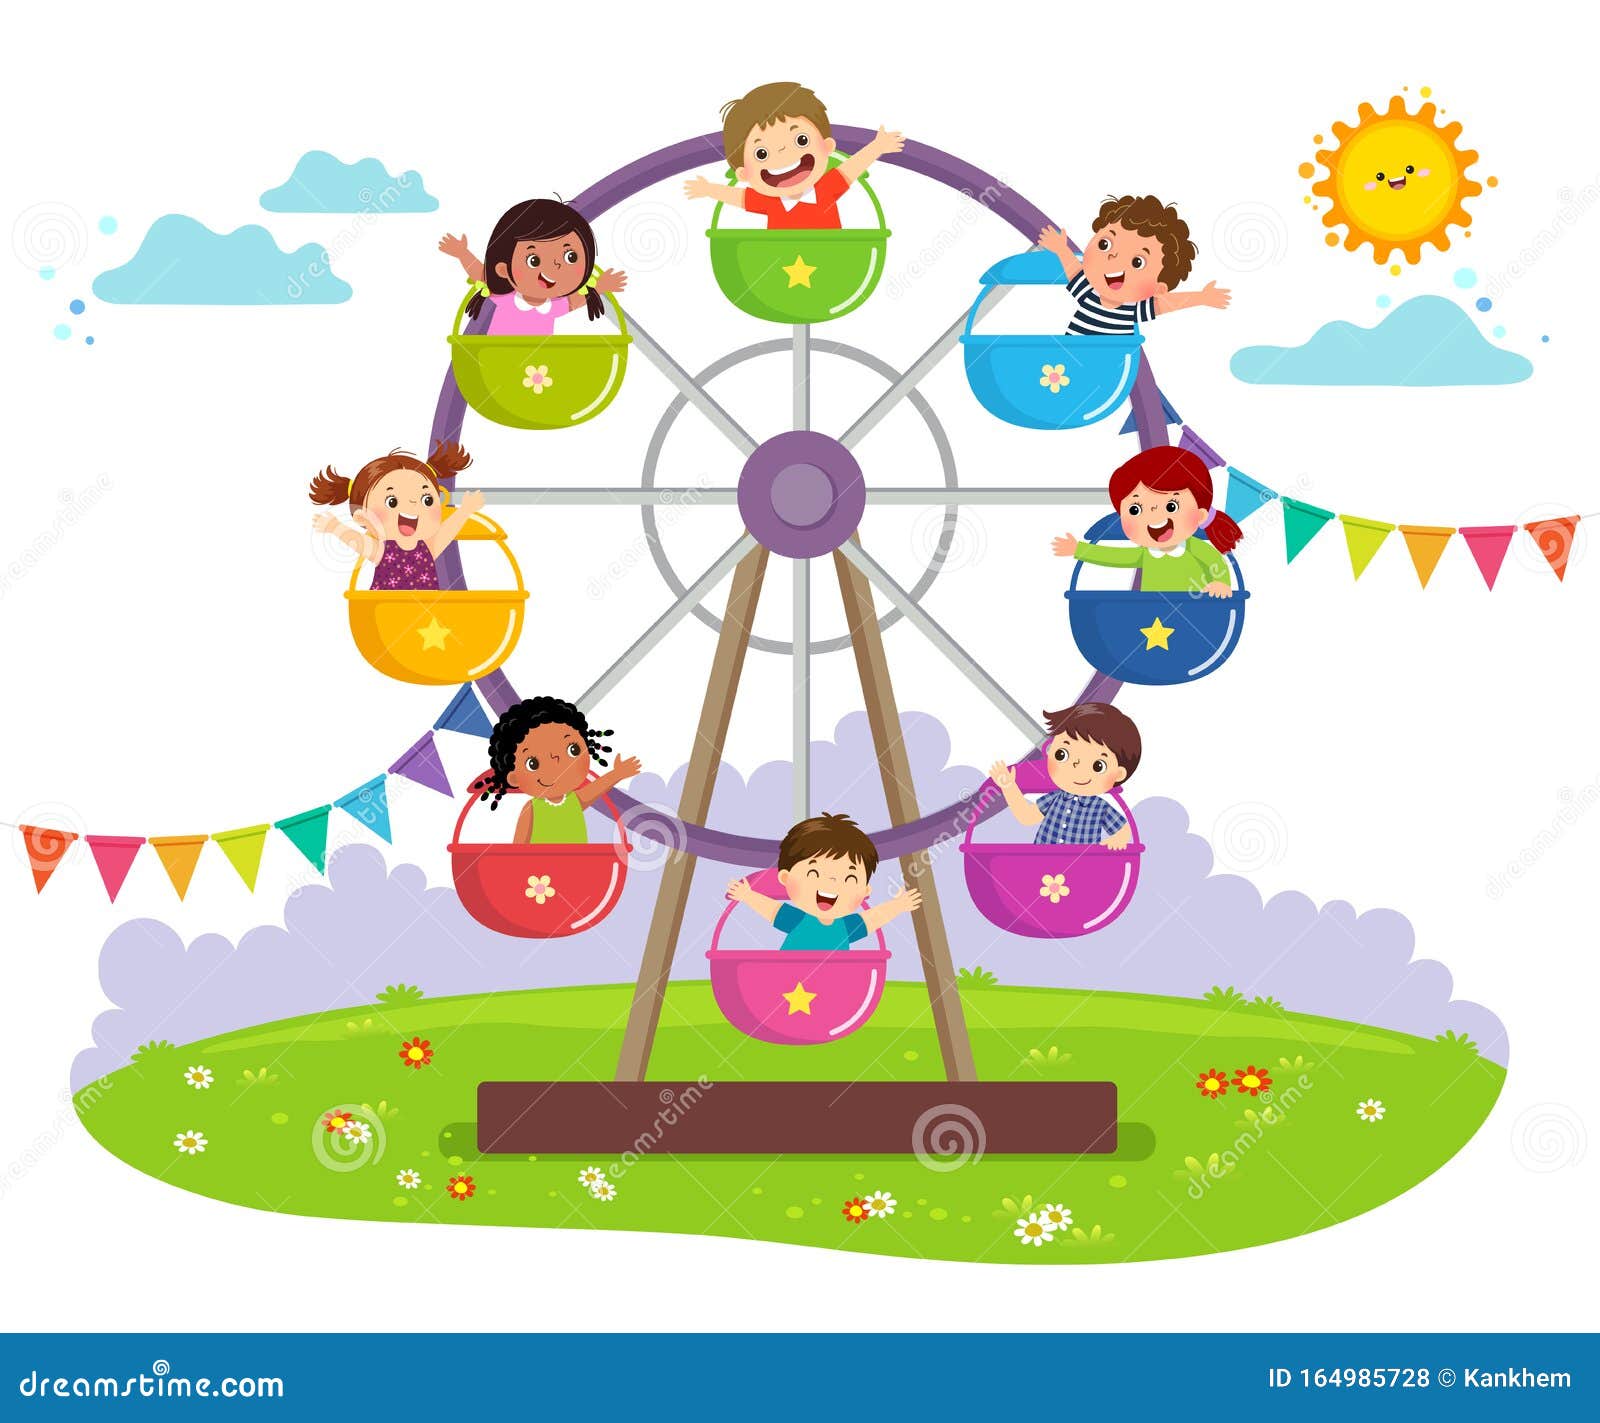 kids riding on wheel ferris in an amusement park